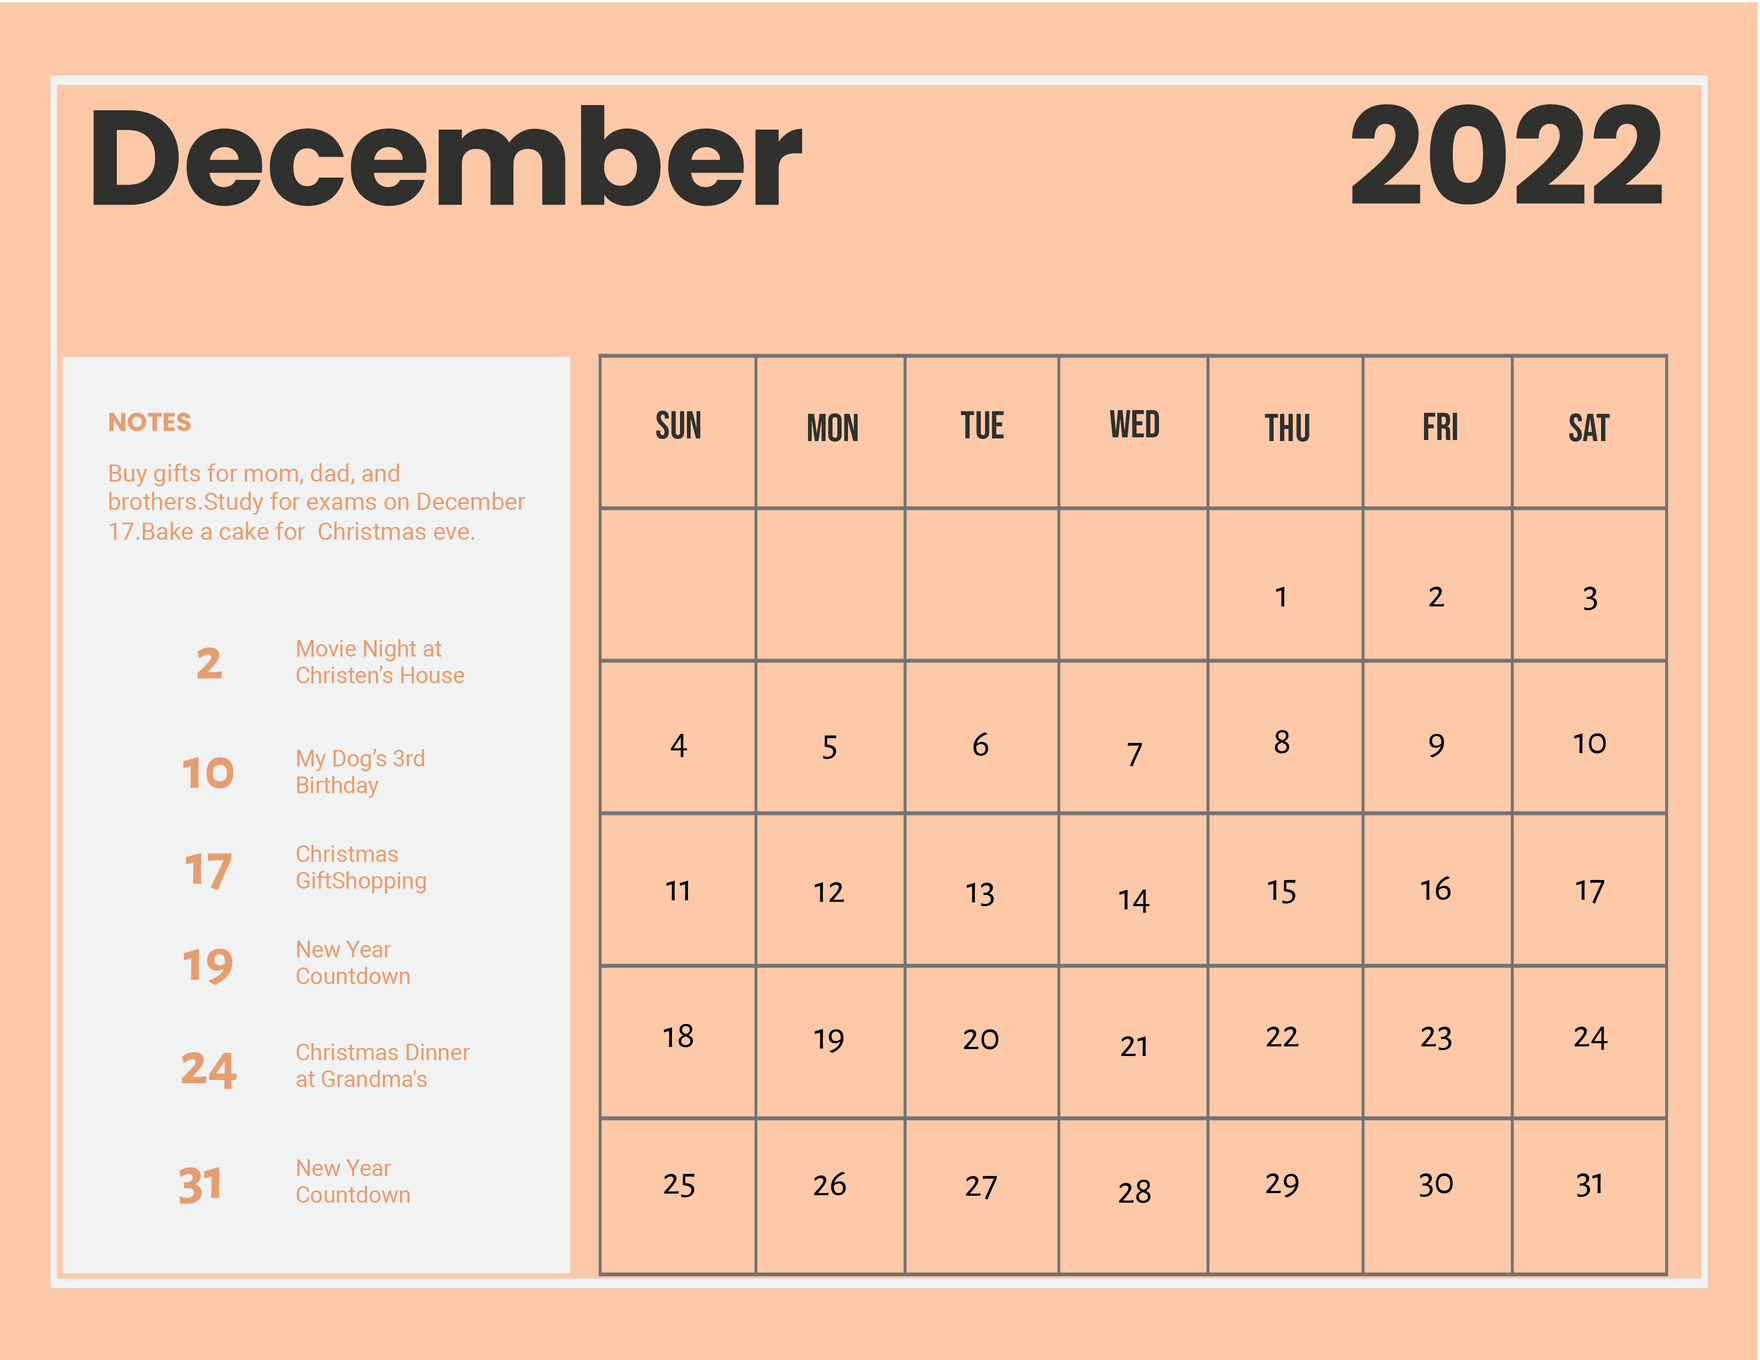 December 2022 Photo Calendar Template in Word, Illustrator, PSD